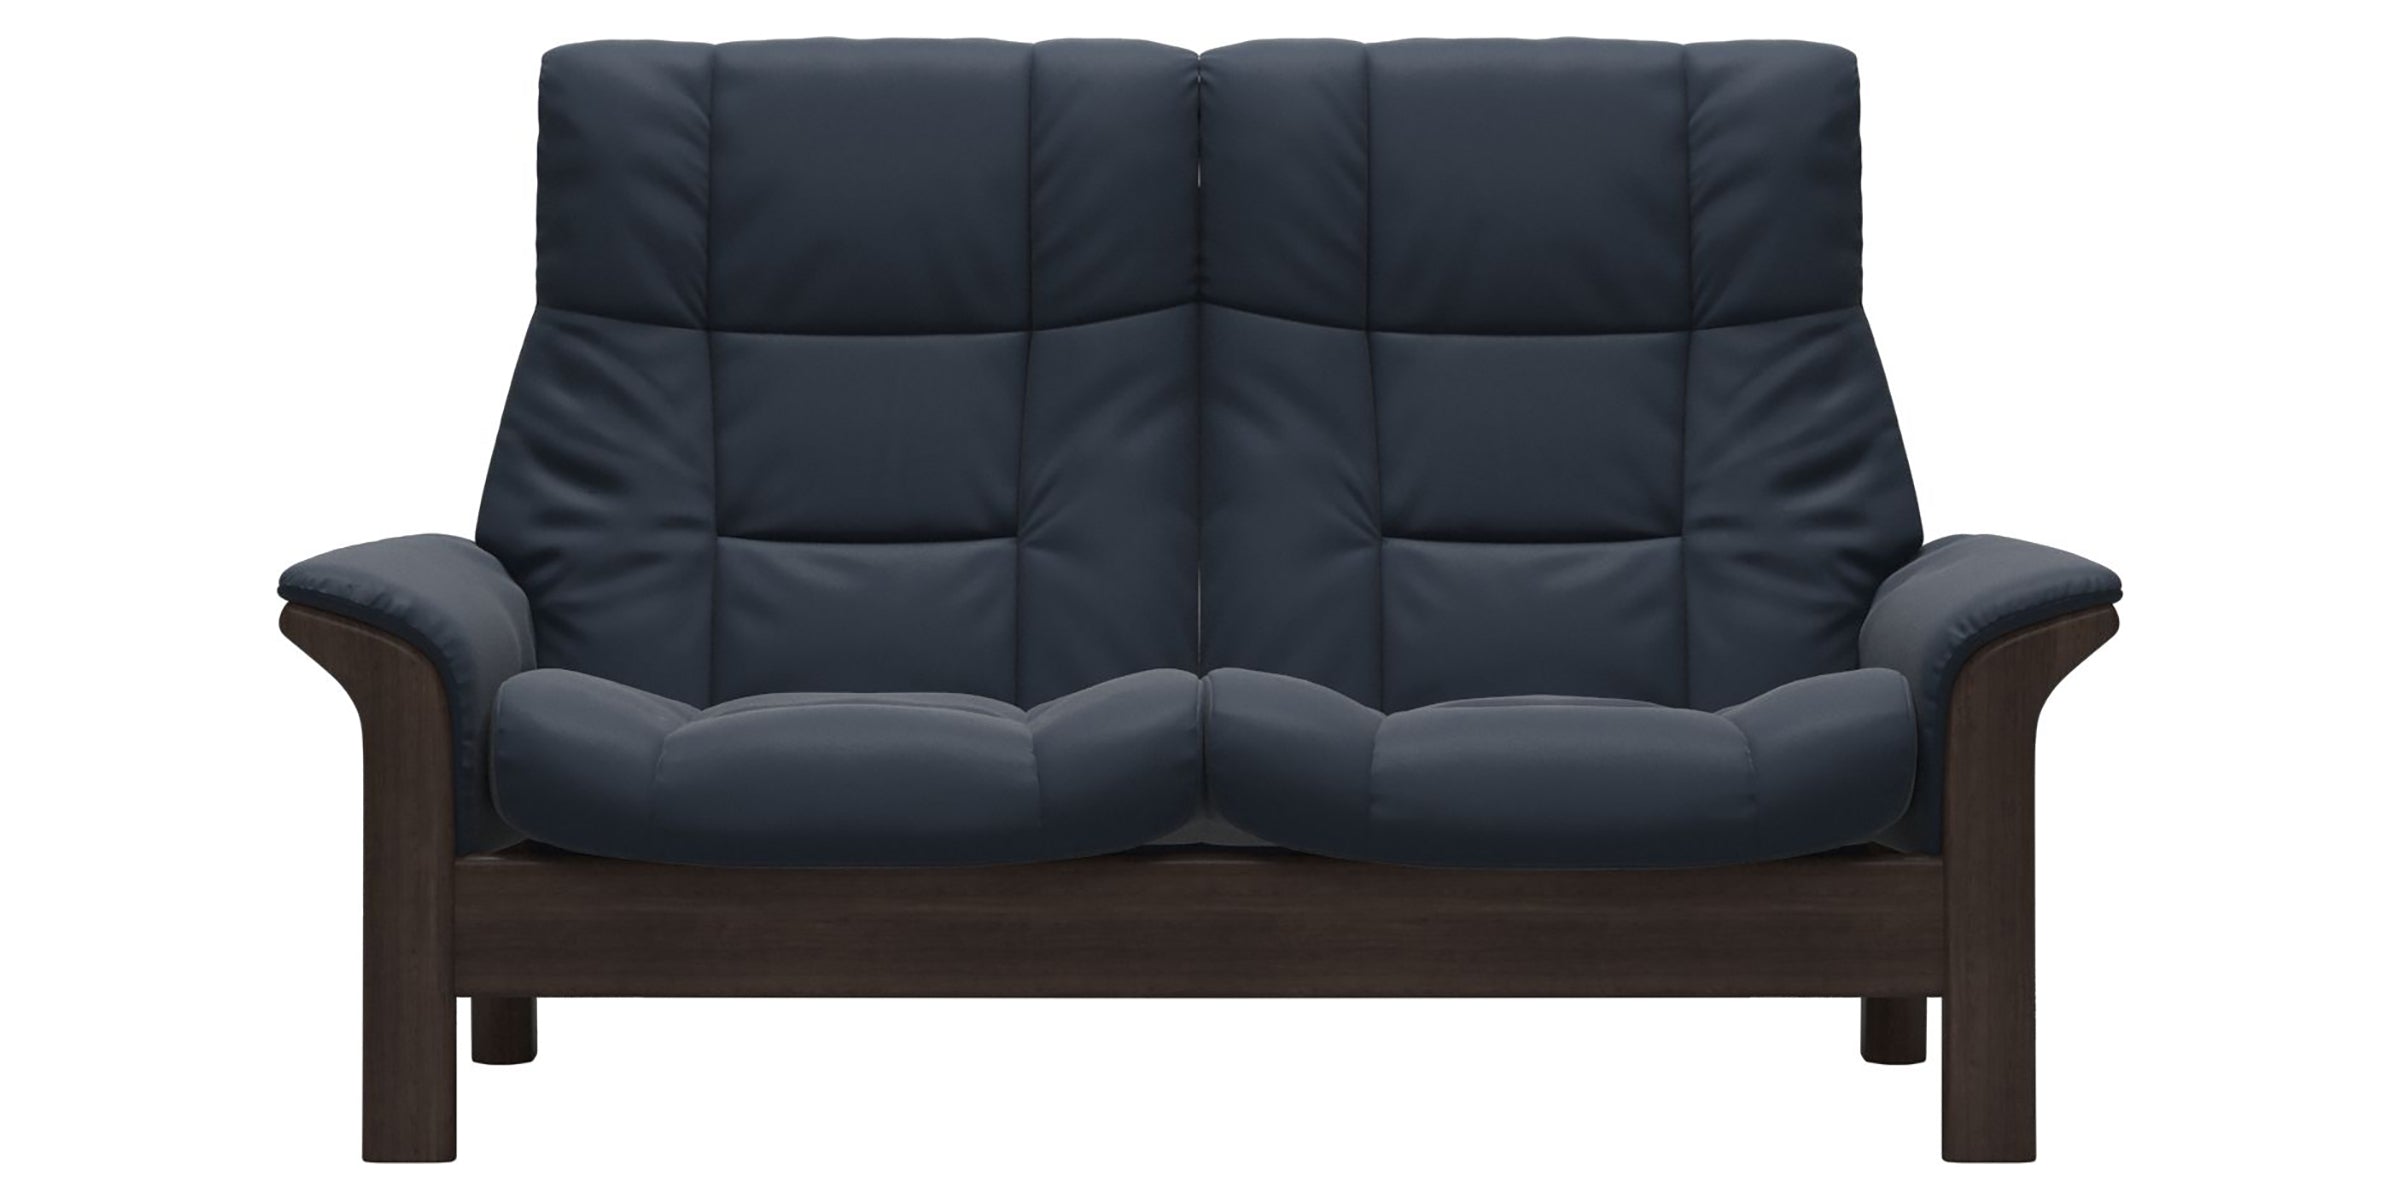 Paloma Leather Oxford Blue and Wenge Base | Stressless Buckingham 2-Seater High Back Sofa | Valley Ridge Furniture